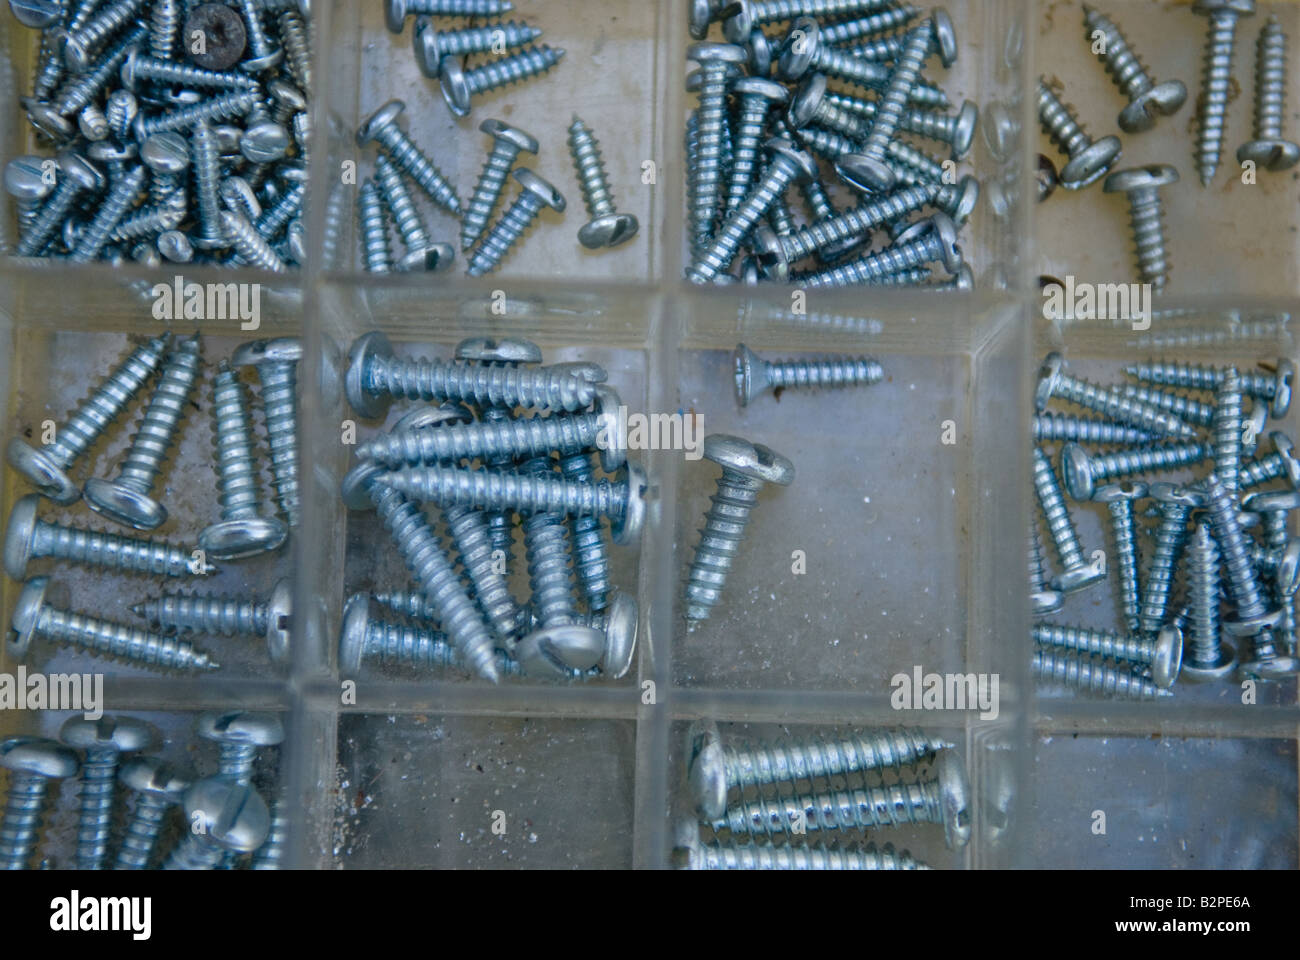 various screws in organiser Stock Photo